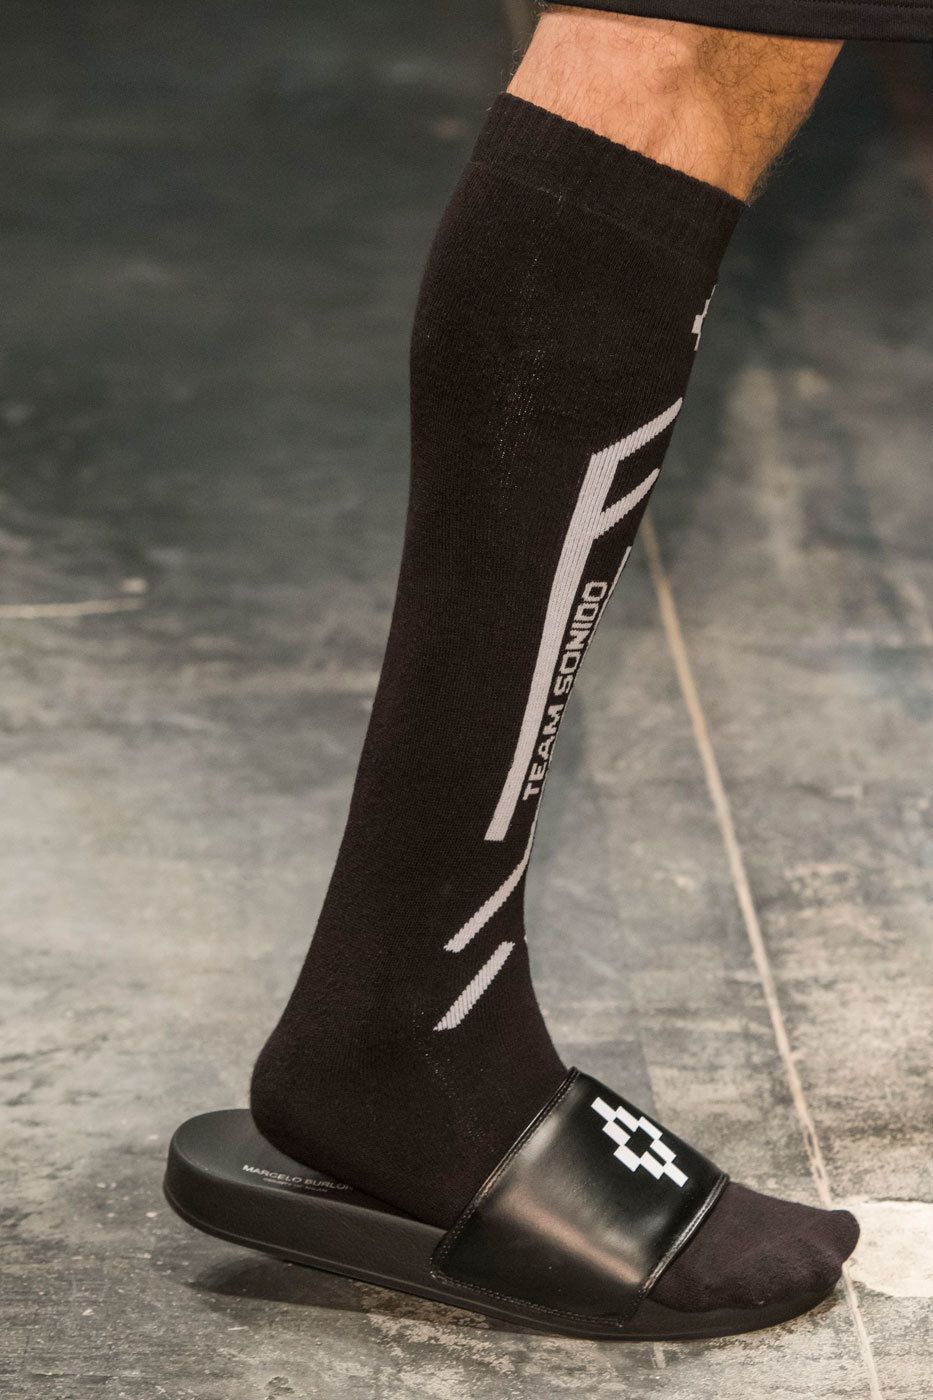 Human leg, Joint, Carmine, Fashion, Black, Street fashion, Grey, Close-up, Calf, Leather, 